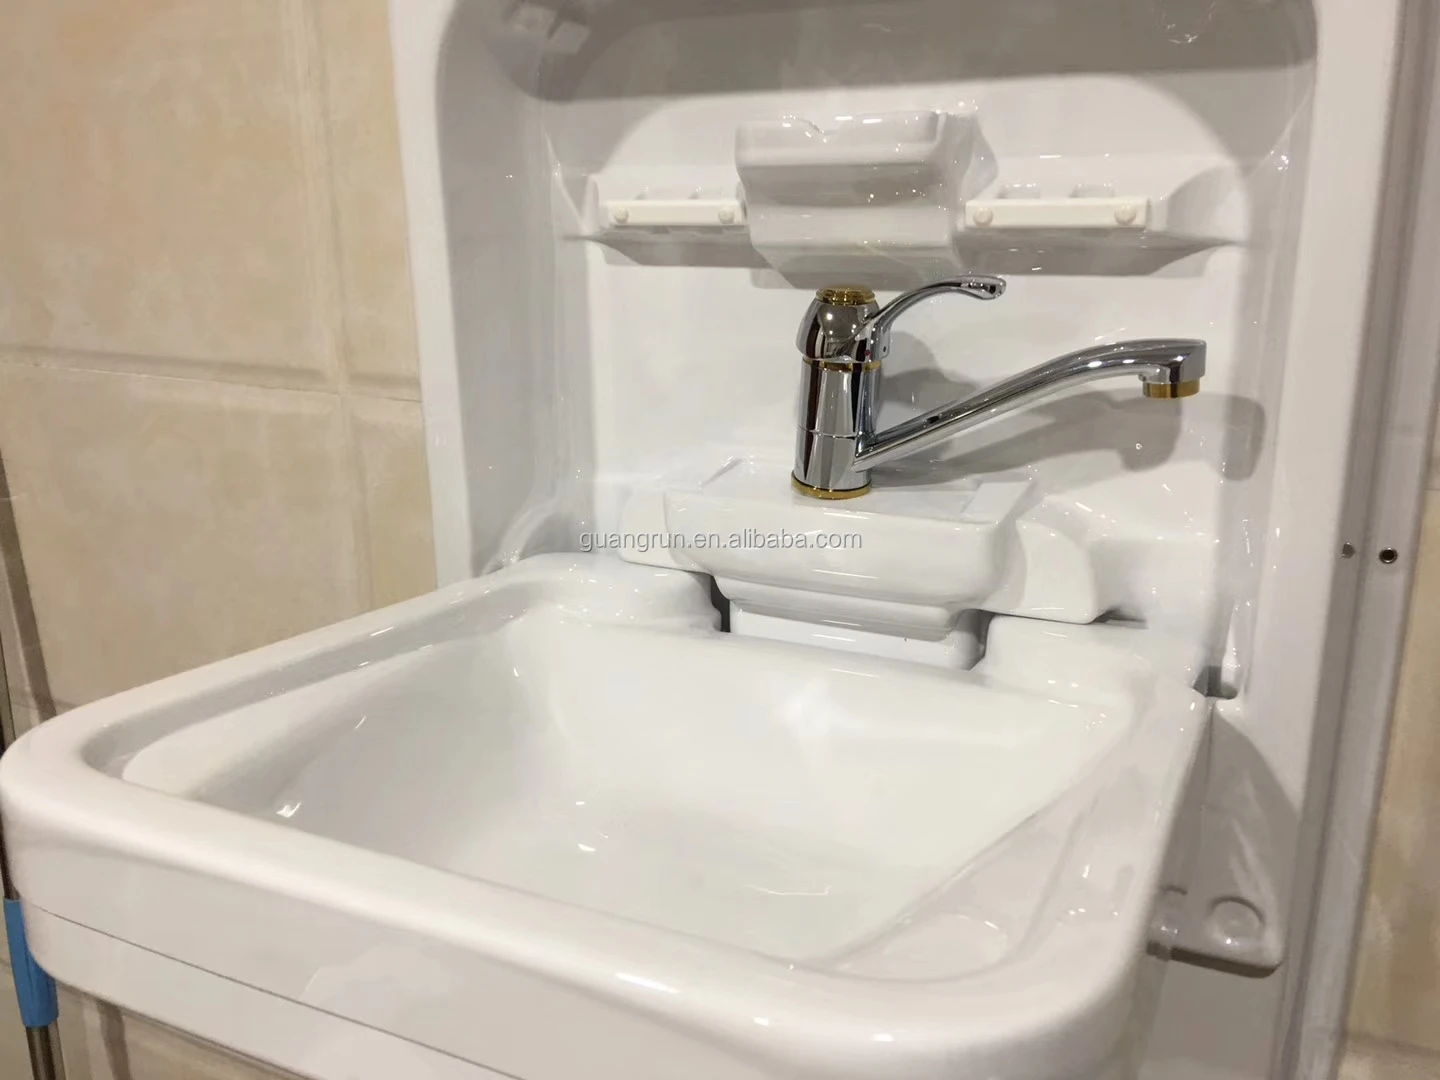 Abs Wall Mounted Foldable Bathroom Toilet Sink For Rv Caravan Motorhome Yacht Boat Buy Wall Hanging Sinks